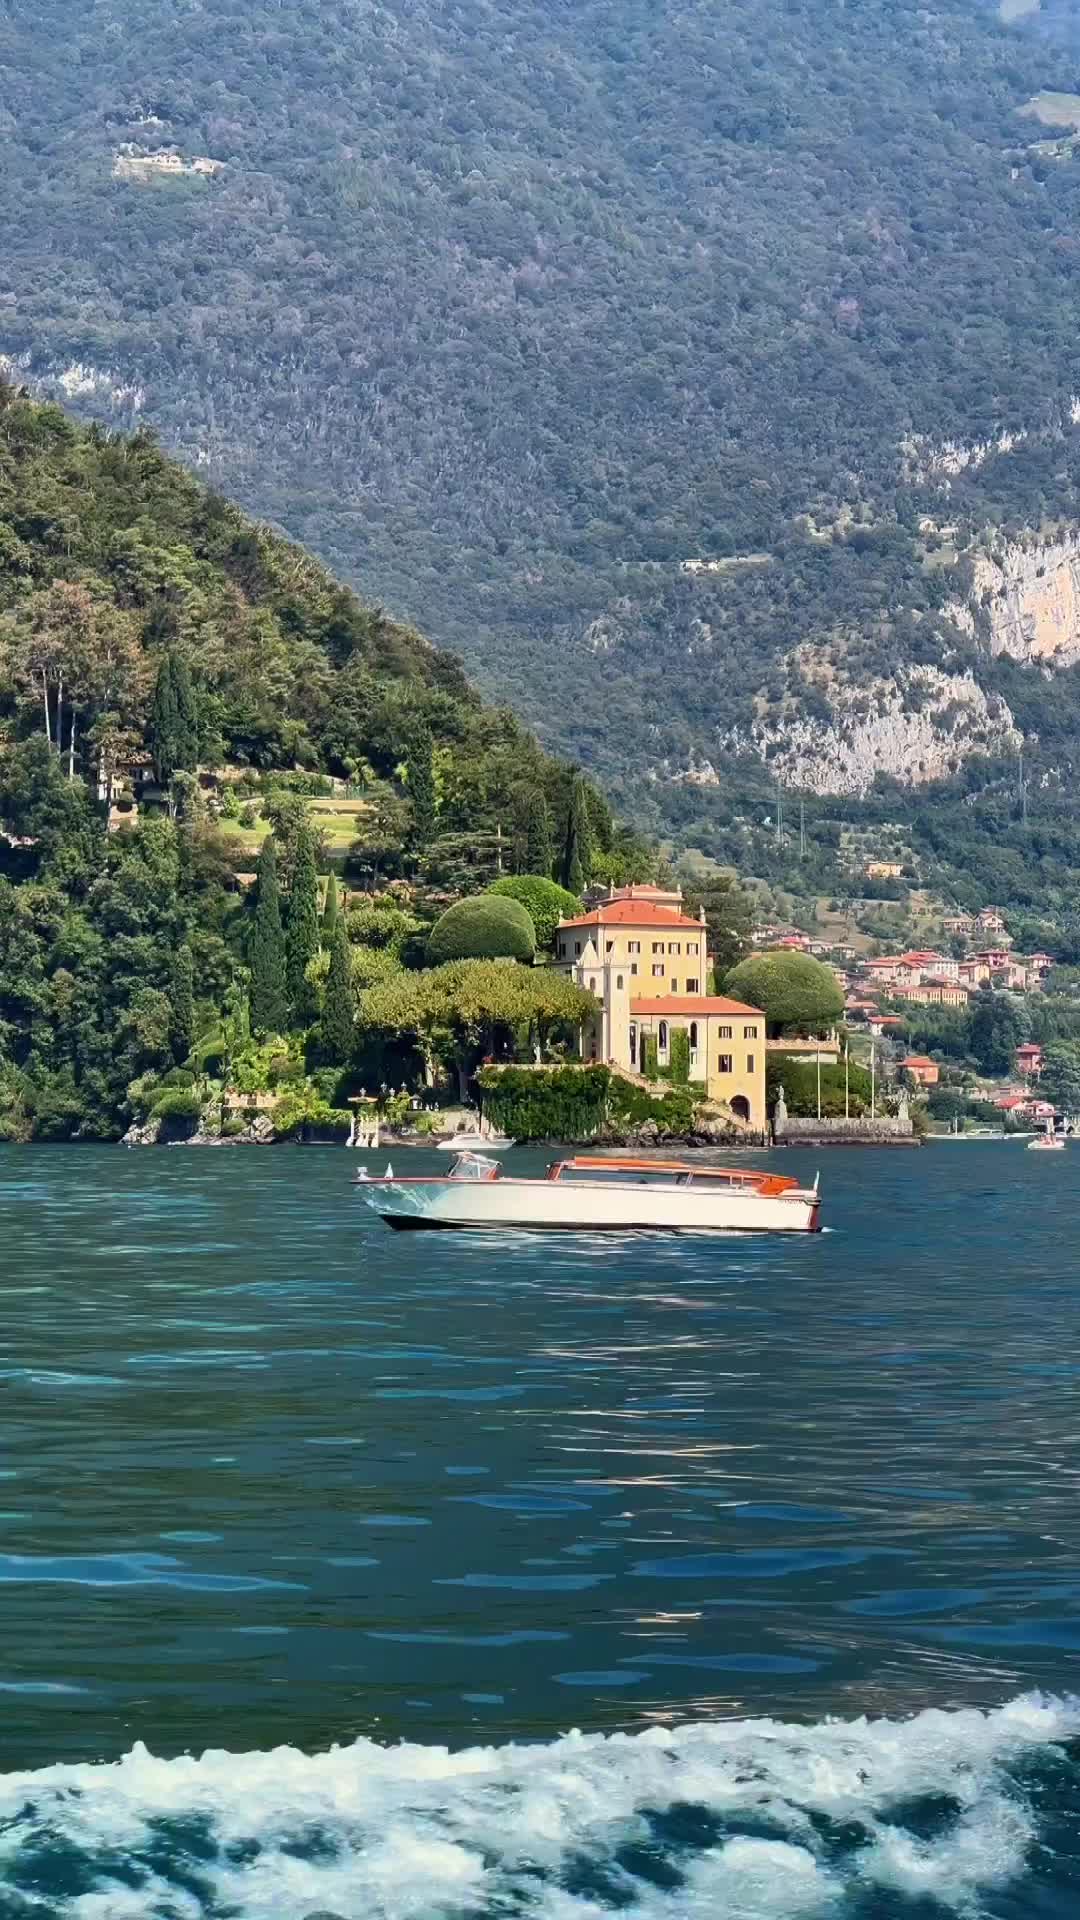 Cruise Lake Como: Soak in Stunning Views & Historic Shores